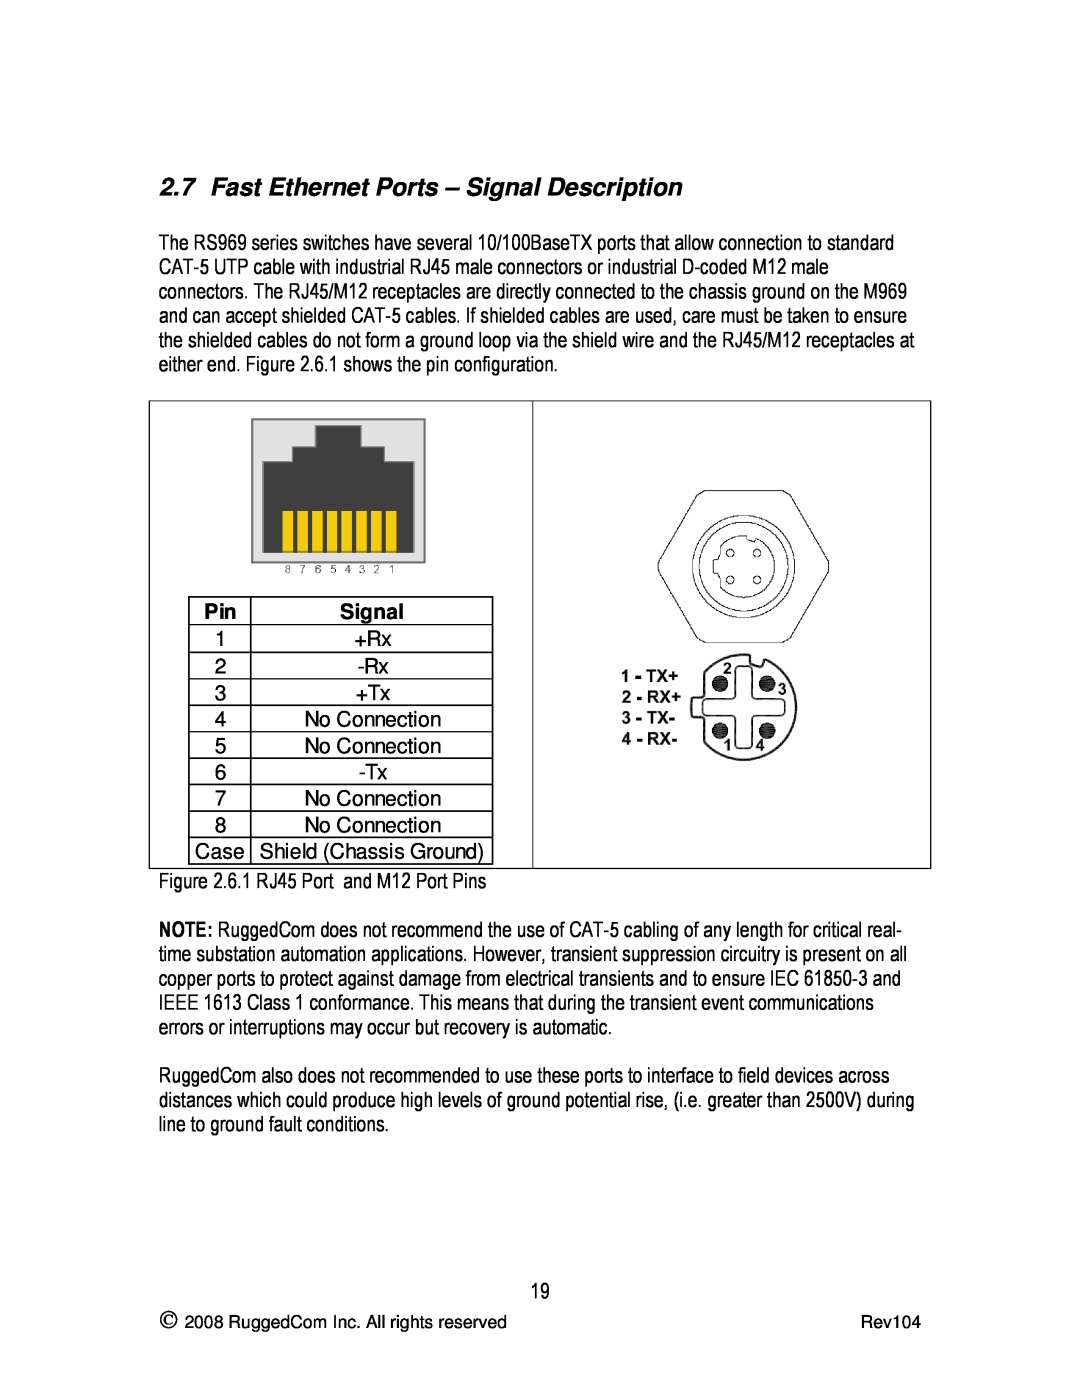 RuggedCom RS969 manual Fast Ethernet Ports - Signal Description 